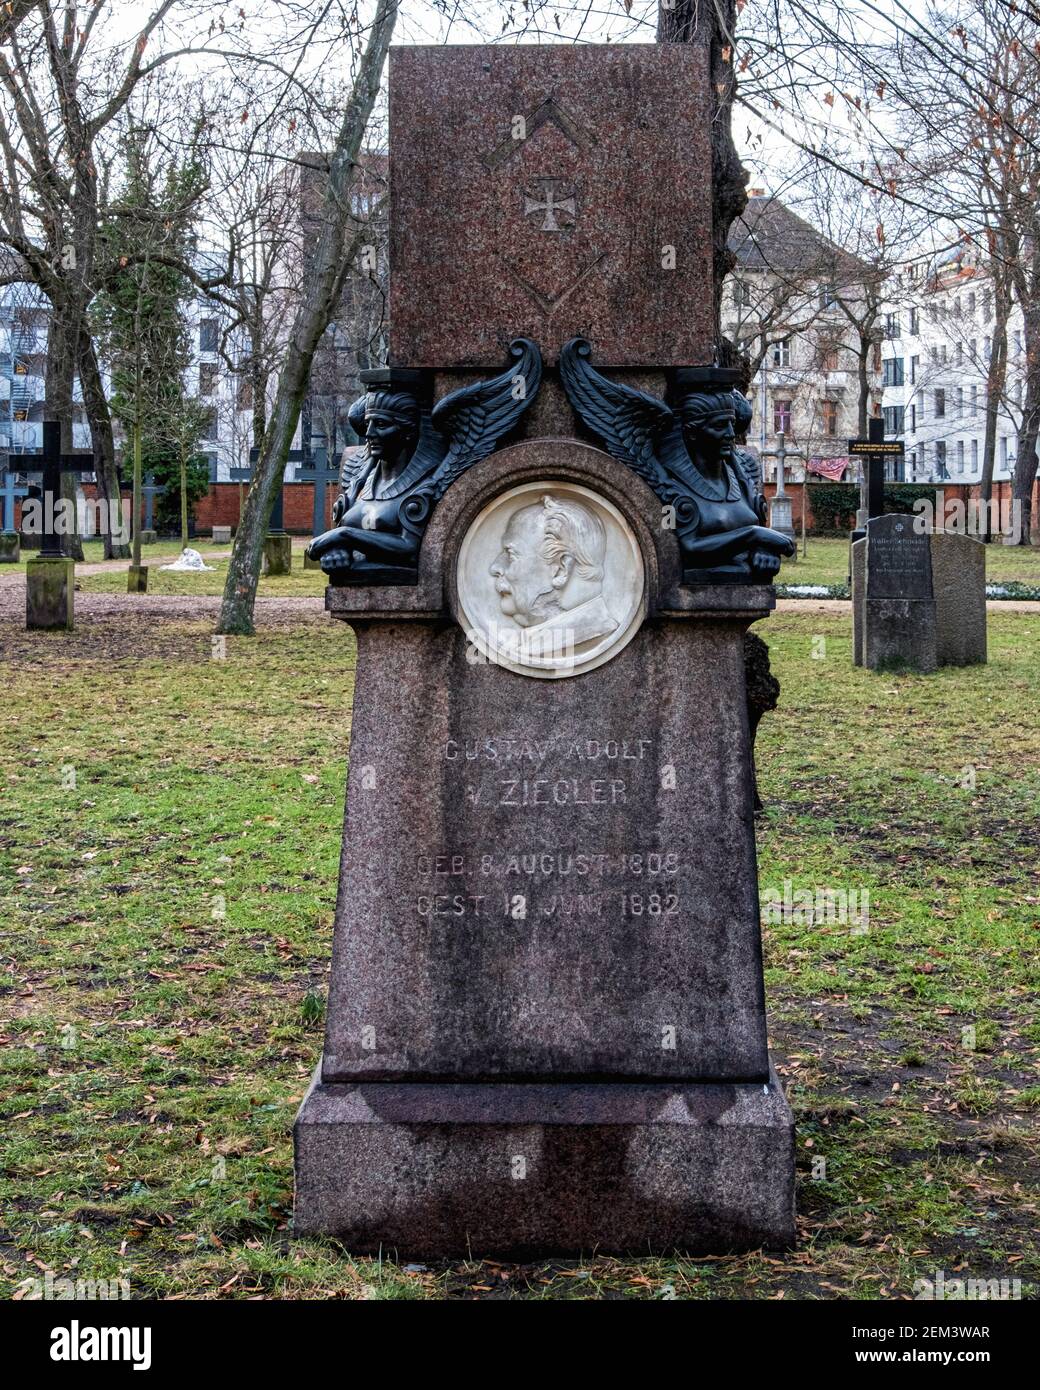 Gustav Adolf V Ziegler Memorial and Crosses in the Military graveyard (Friedhof der Garnisonkirche) in Mitte,Berlin Stock Photo